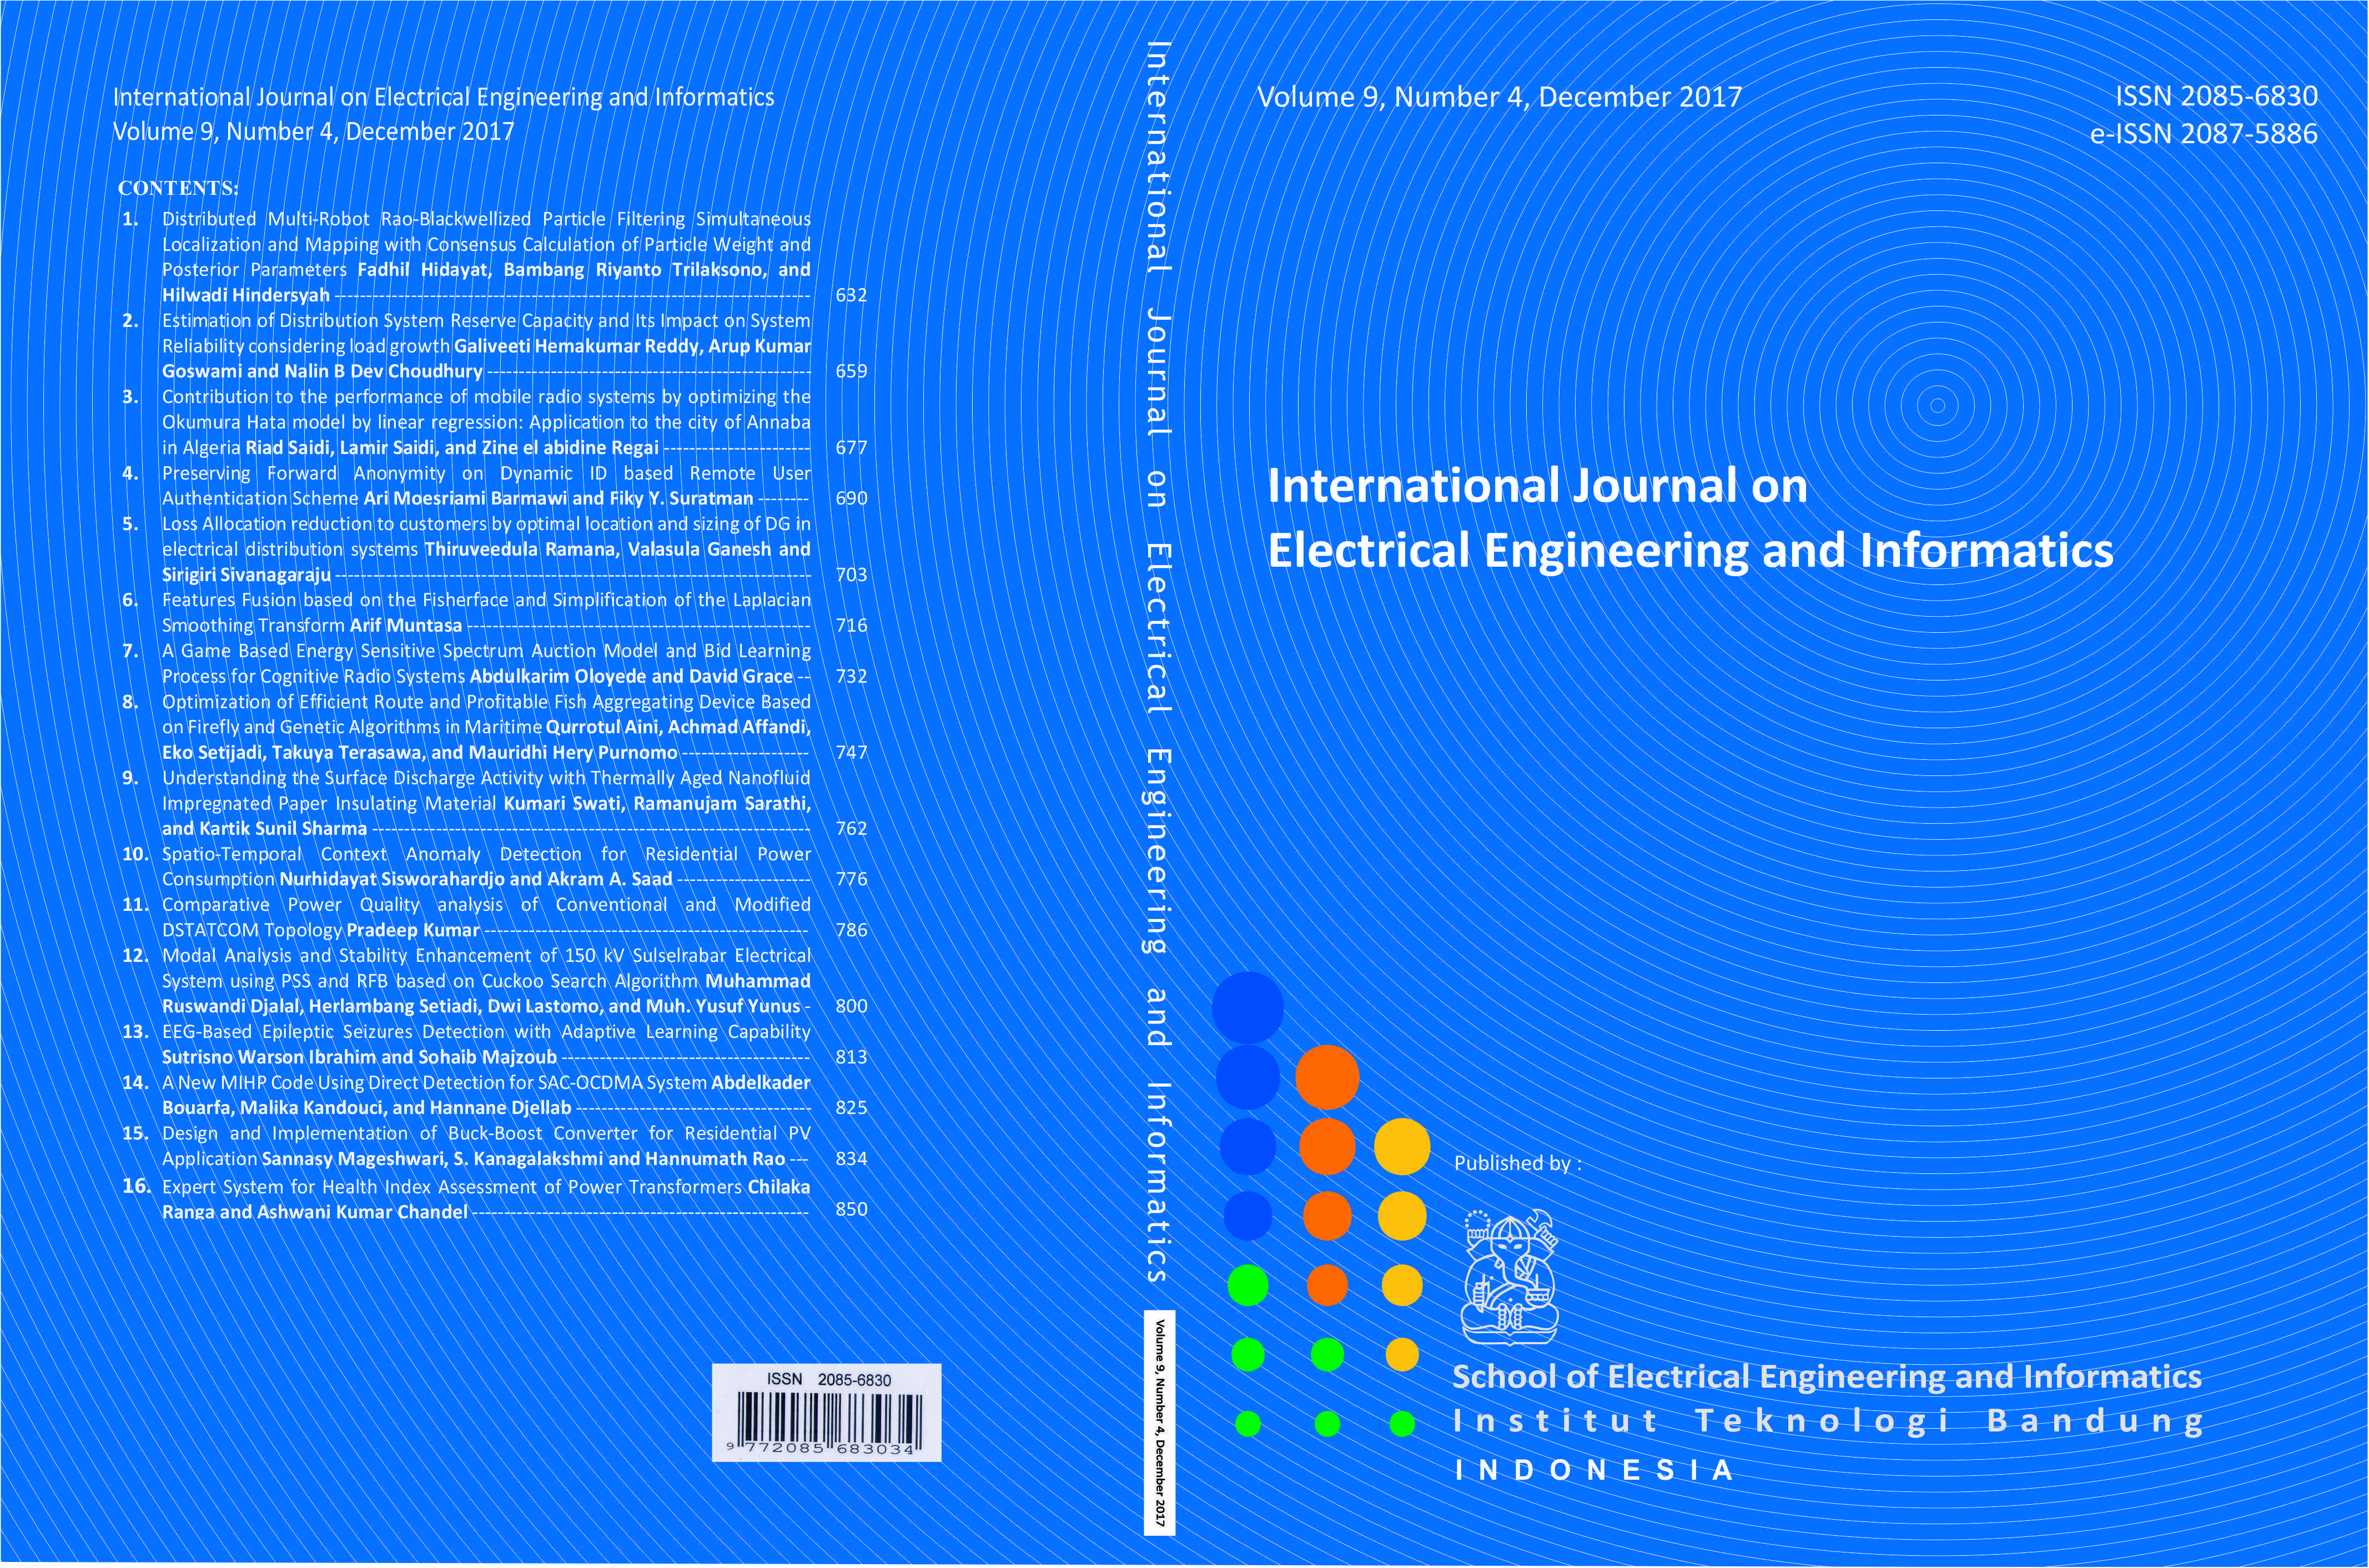 Journal cover Vol. 9 No. 4 December 2017